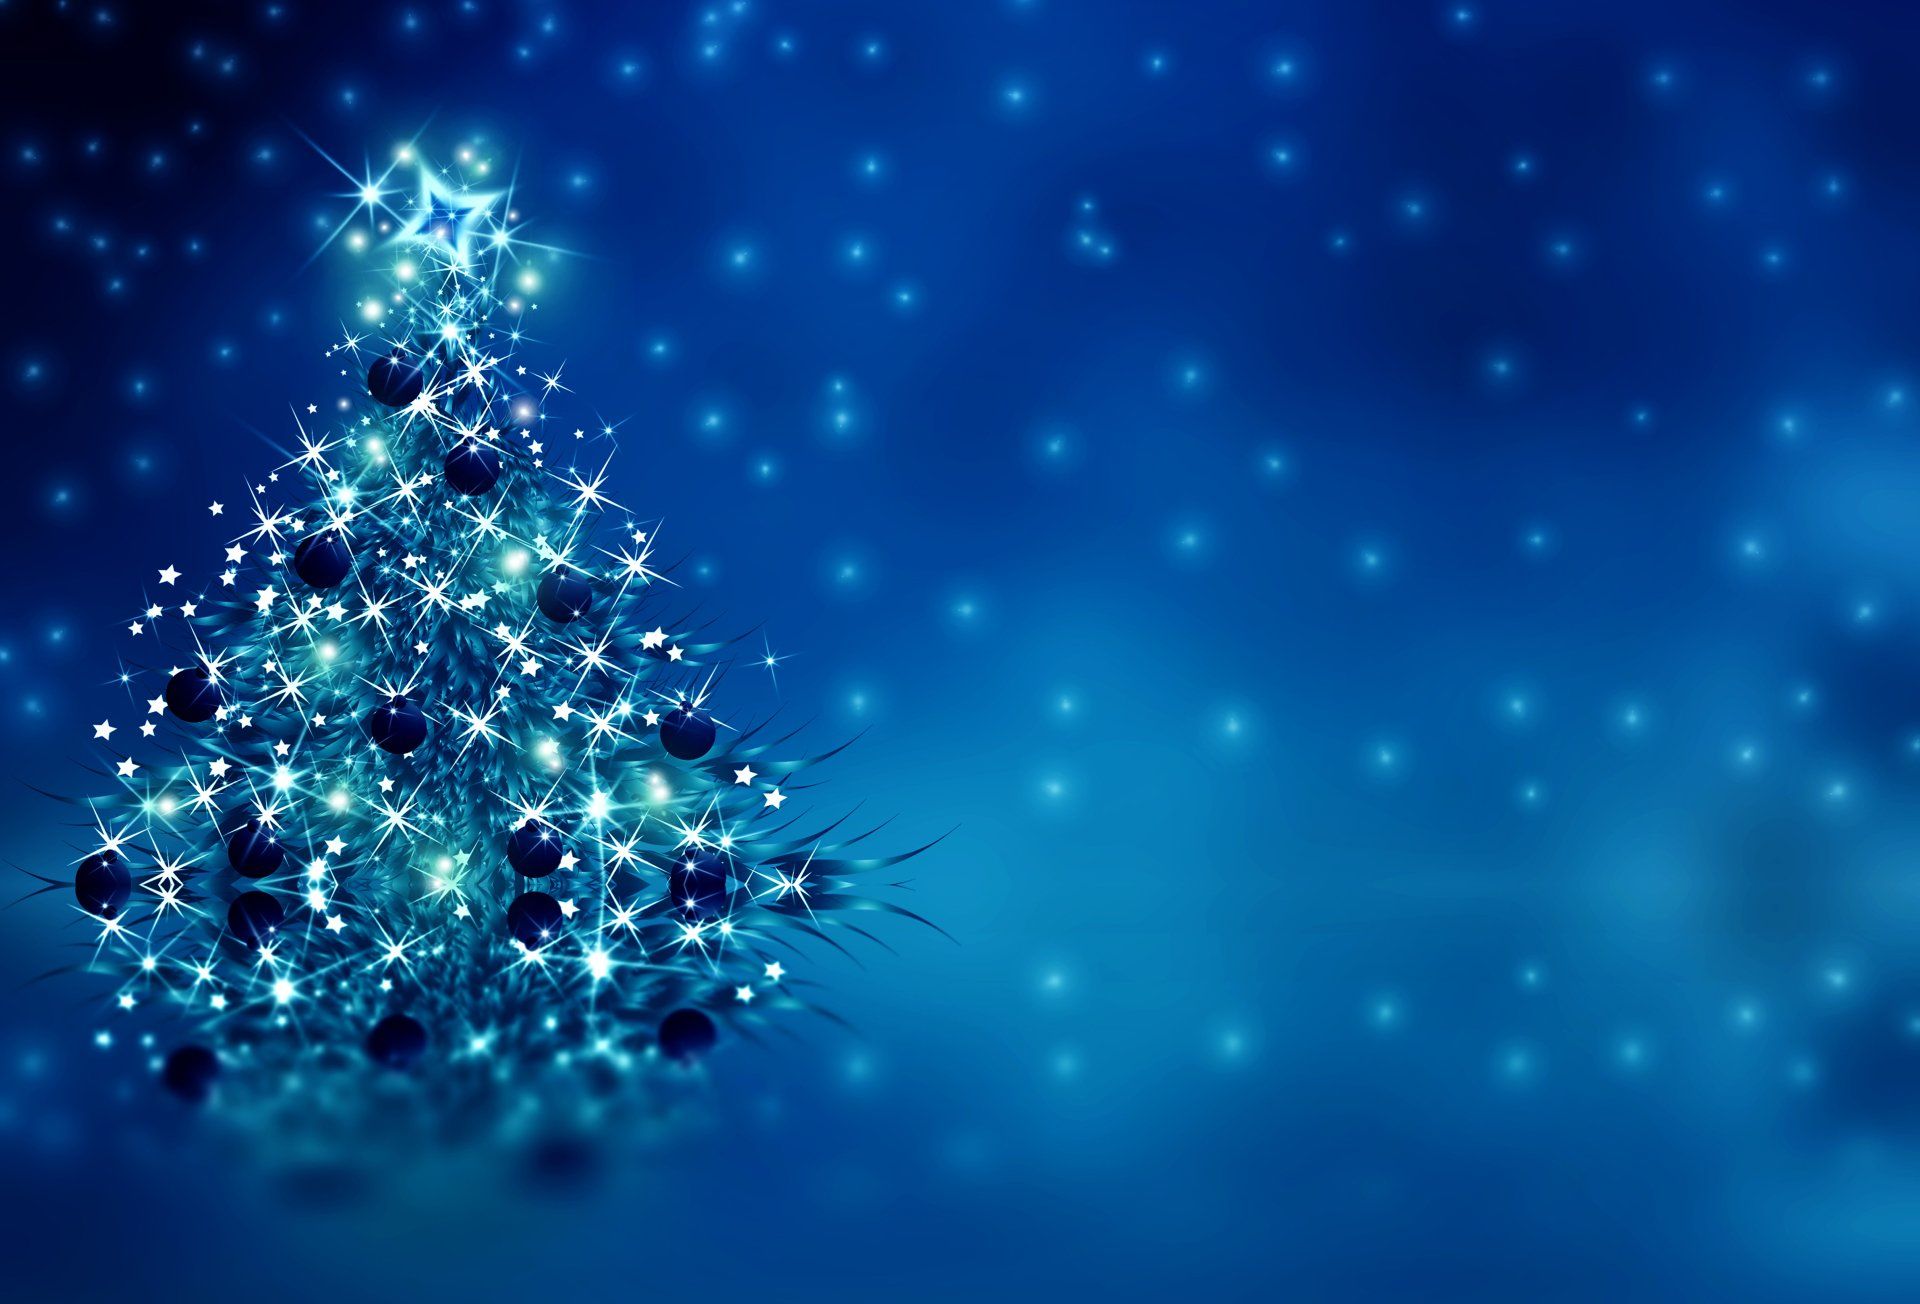 Holiday Christmas Holiday Christmas Tree Blue Silver Sparkles Wallpaper. Christmas tree poster, Christmas background, Blue christmas tree